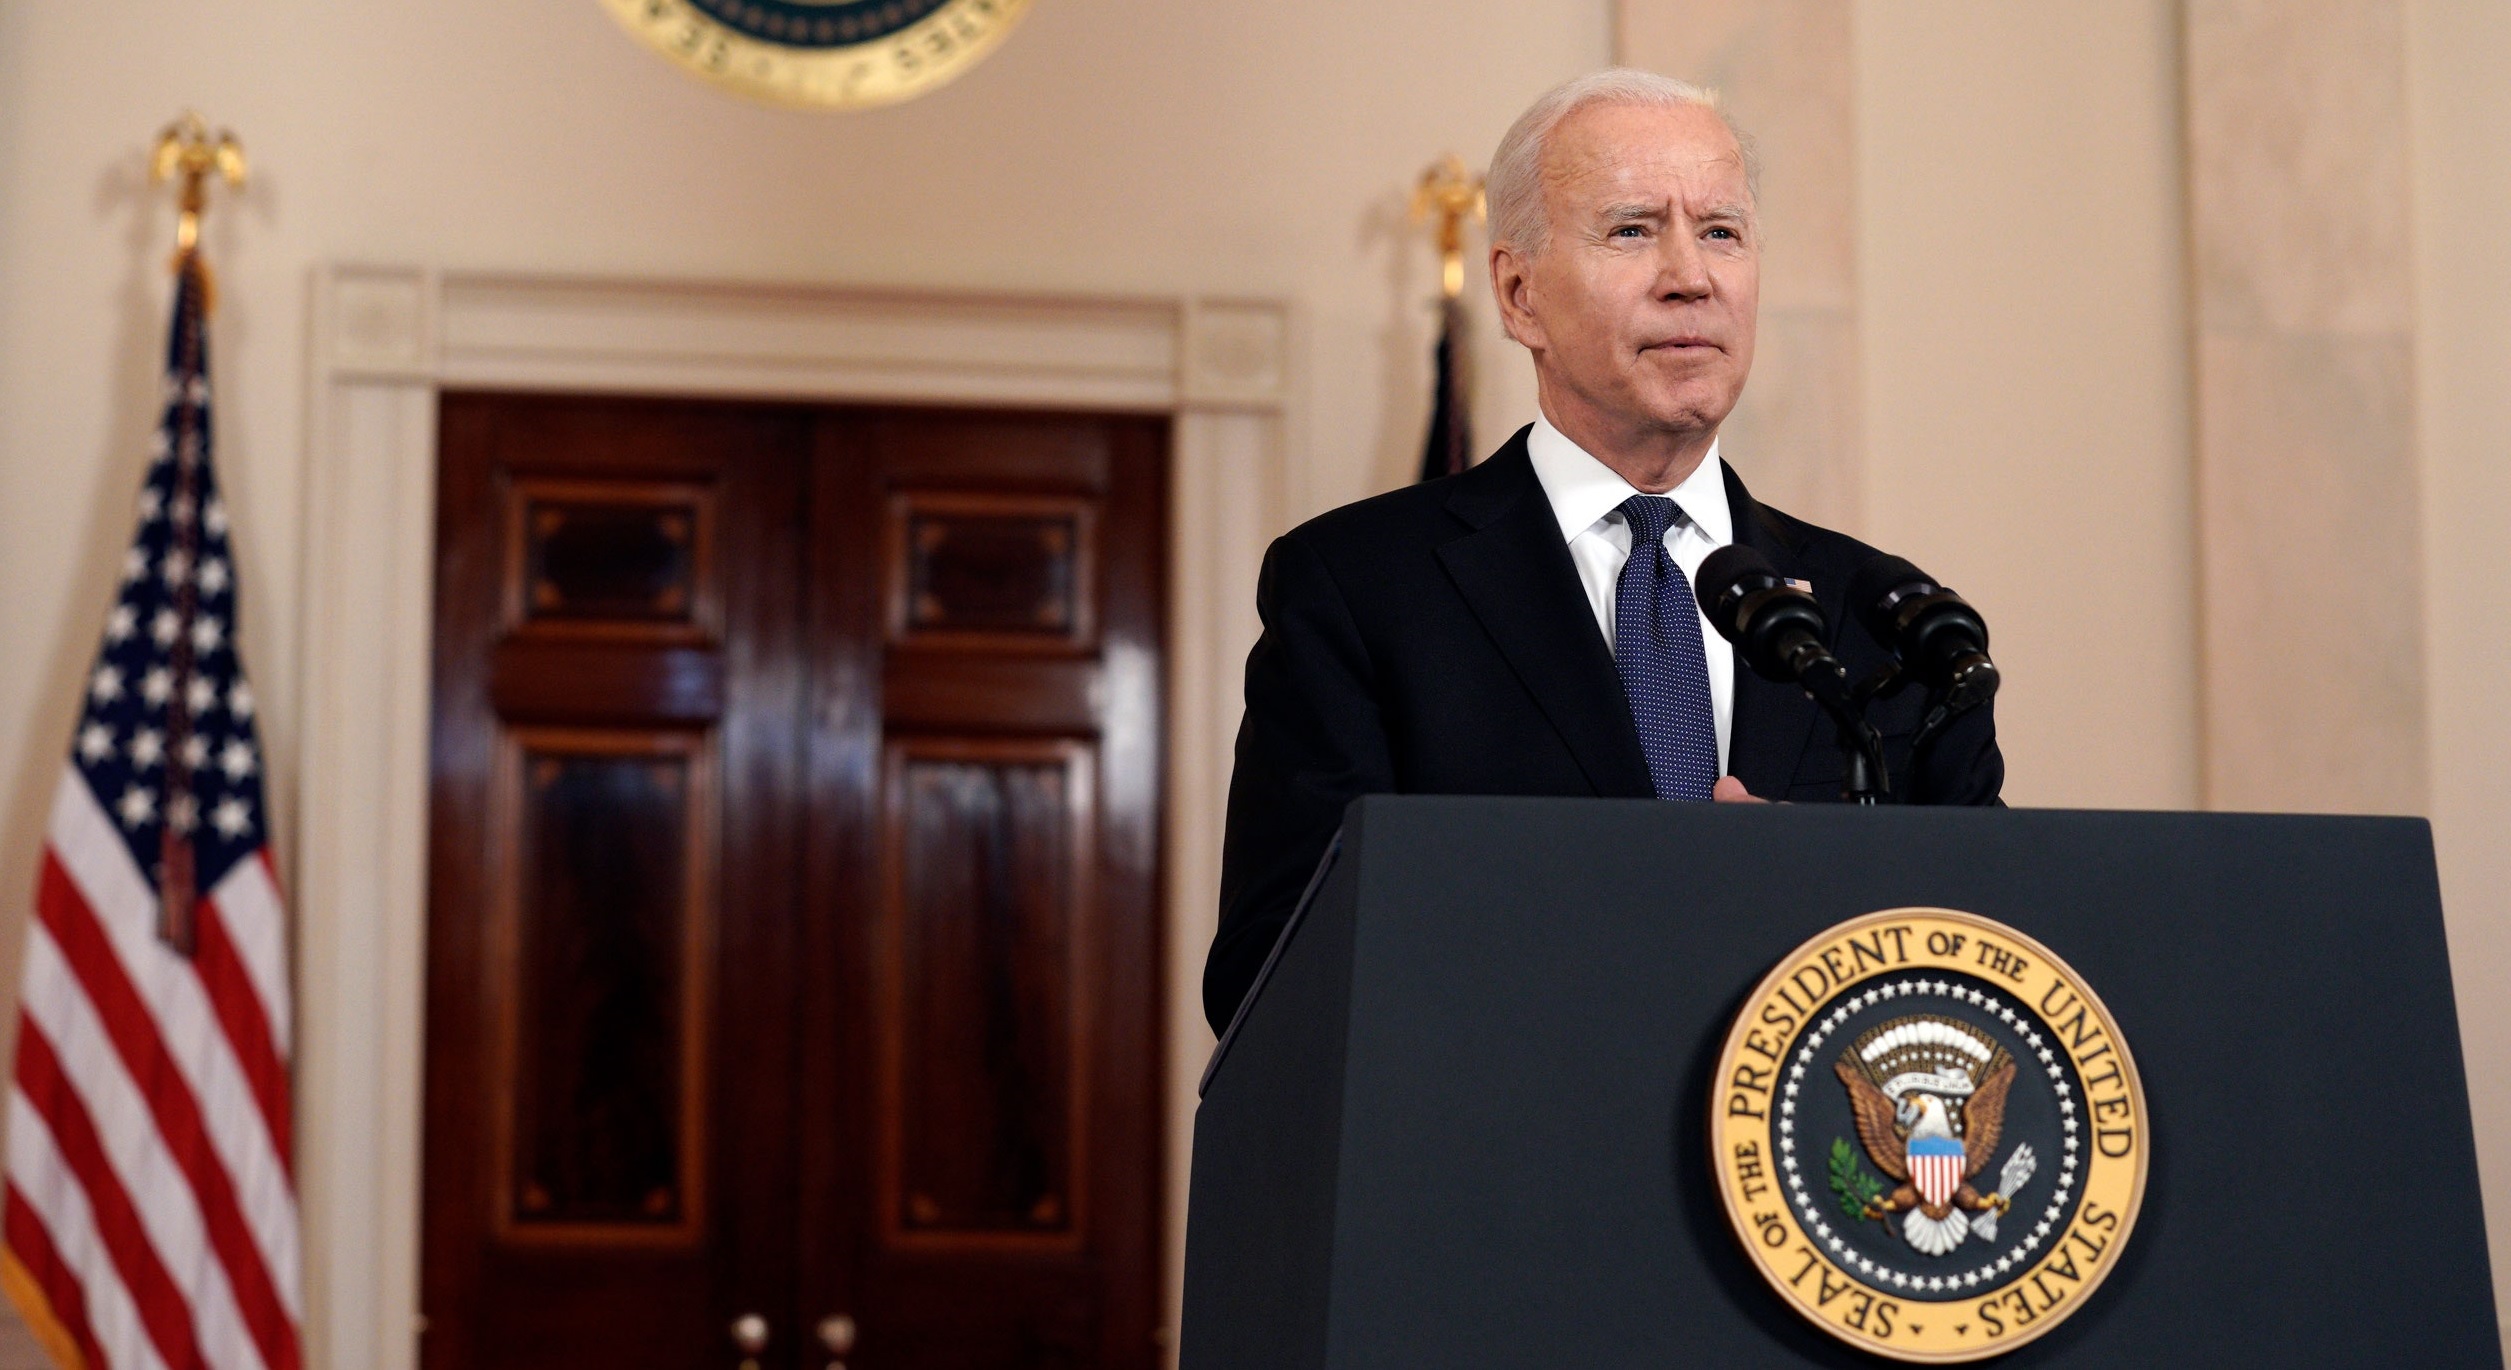 Biden vows new era of 'relentless diplomacy' to resolve global challenges